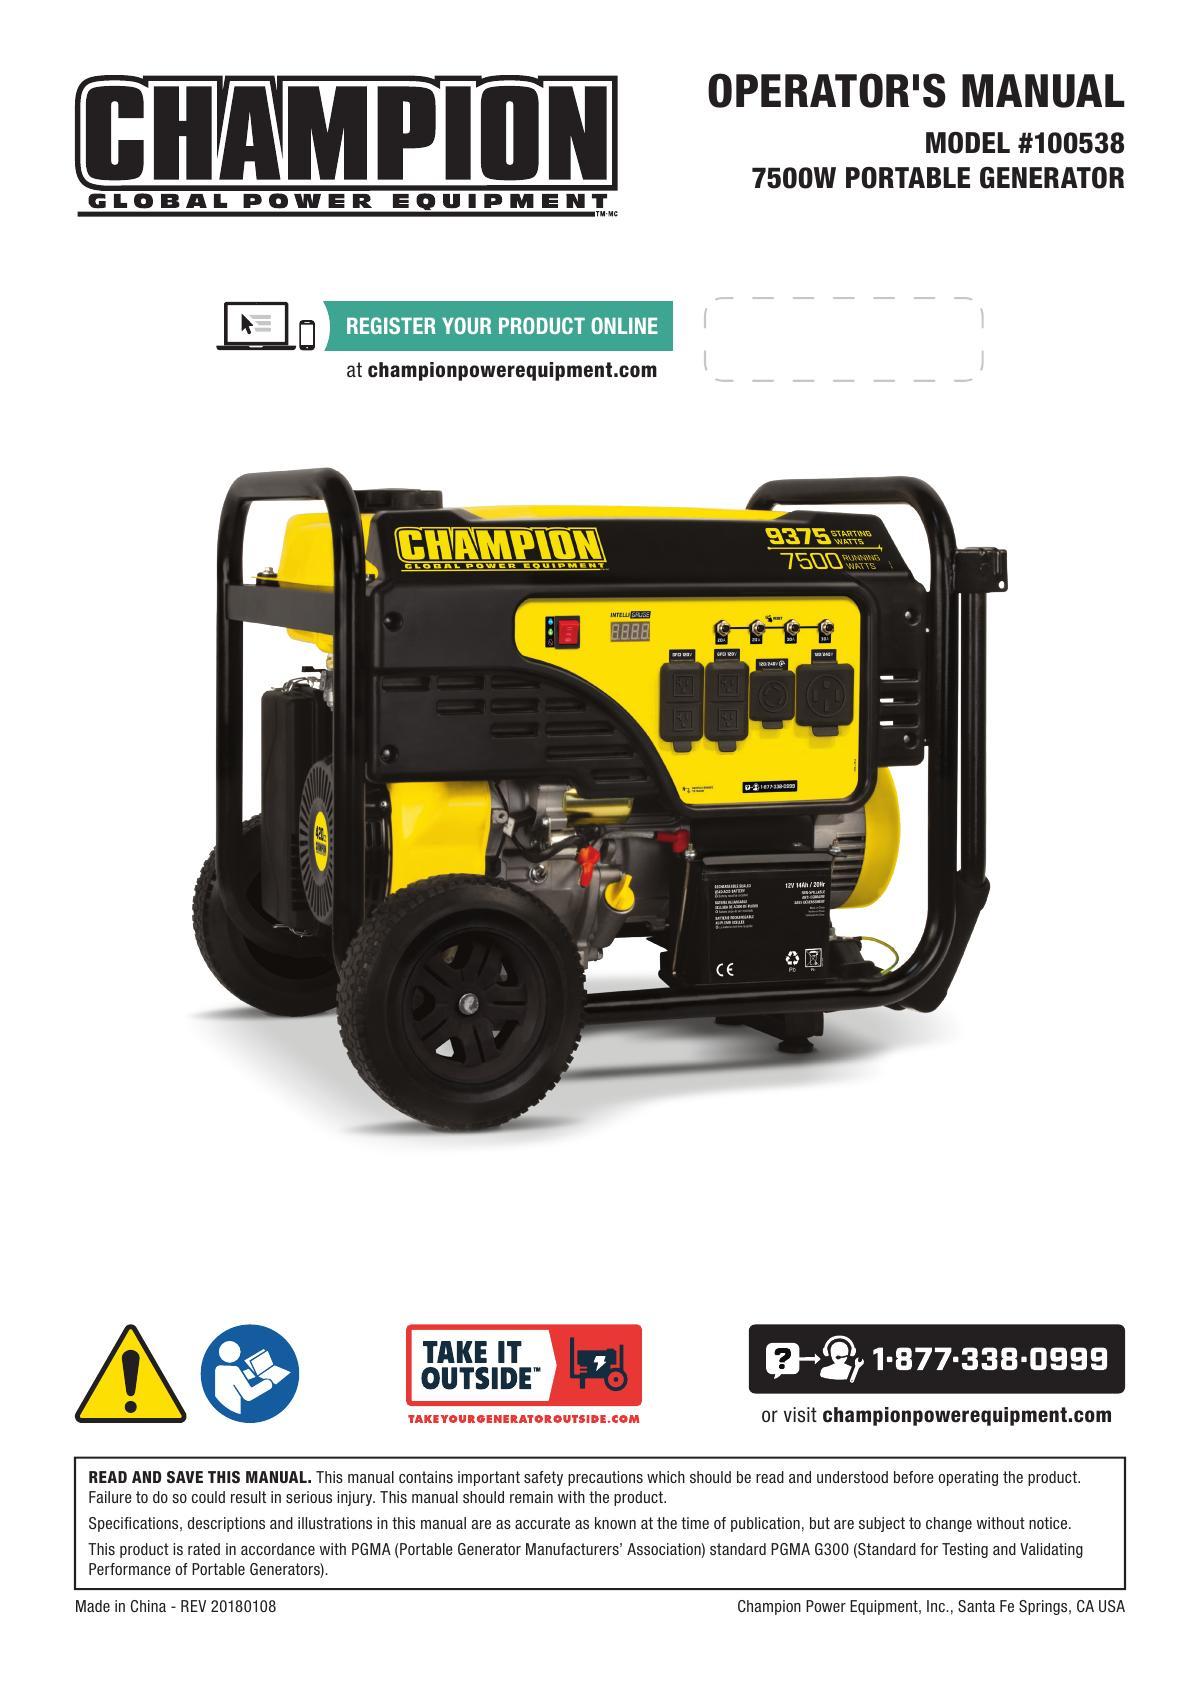 champion-power-equipment-model-100538-7500w-portable-generator---operators-manual.pdf